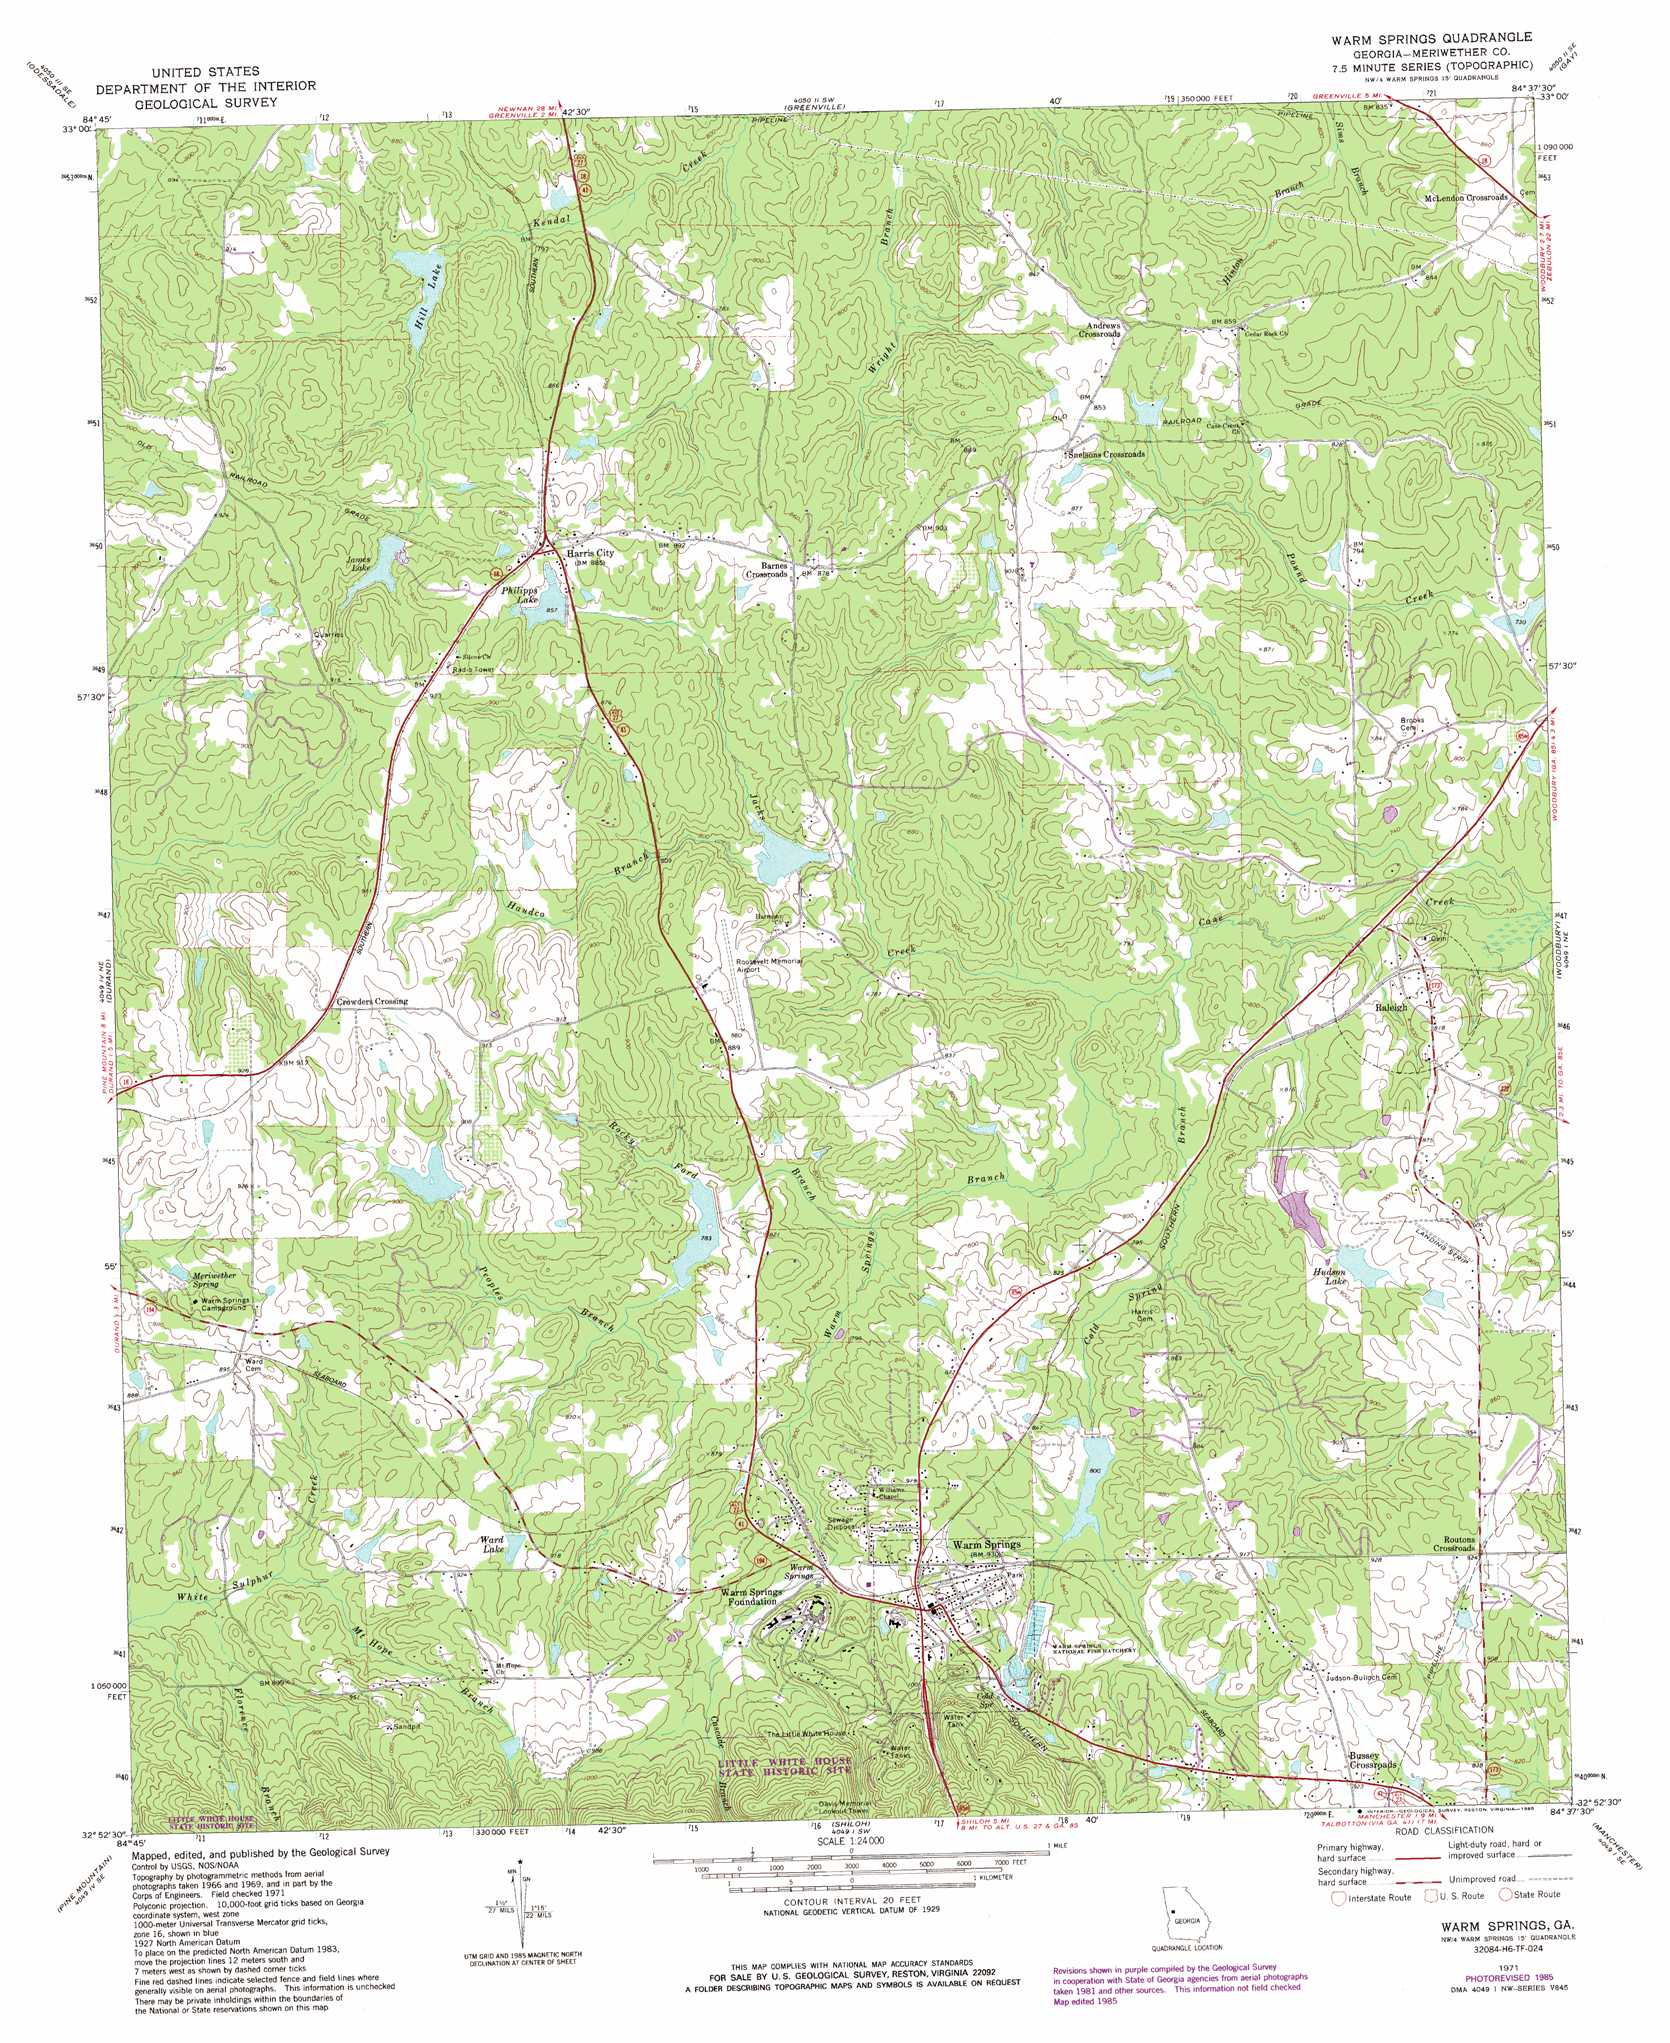 Warm Springs topographic map, GA - USGS Topo Quad 32084h6